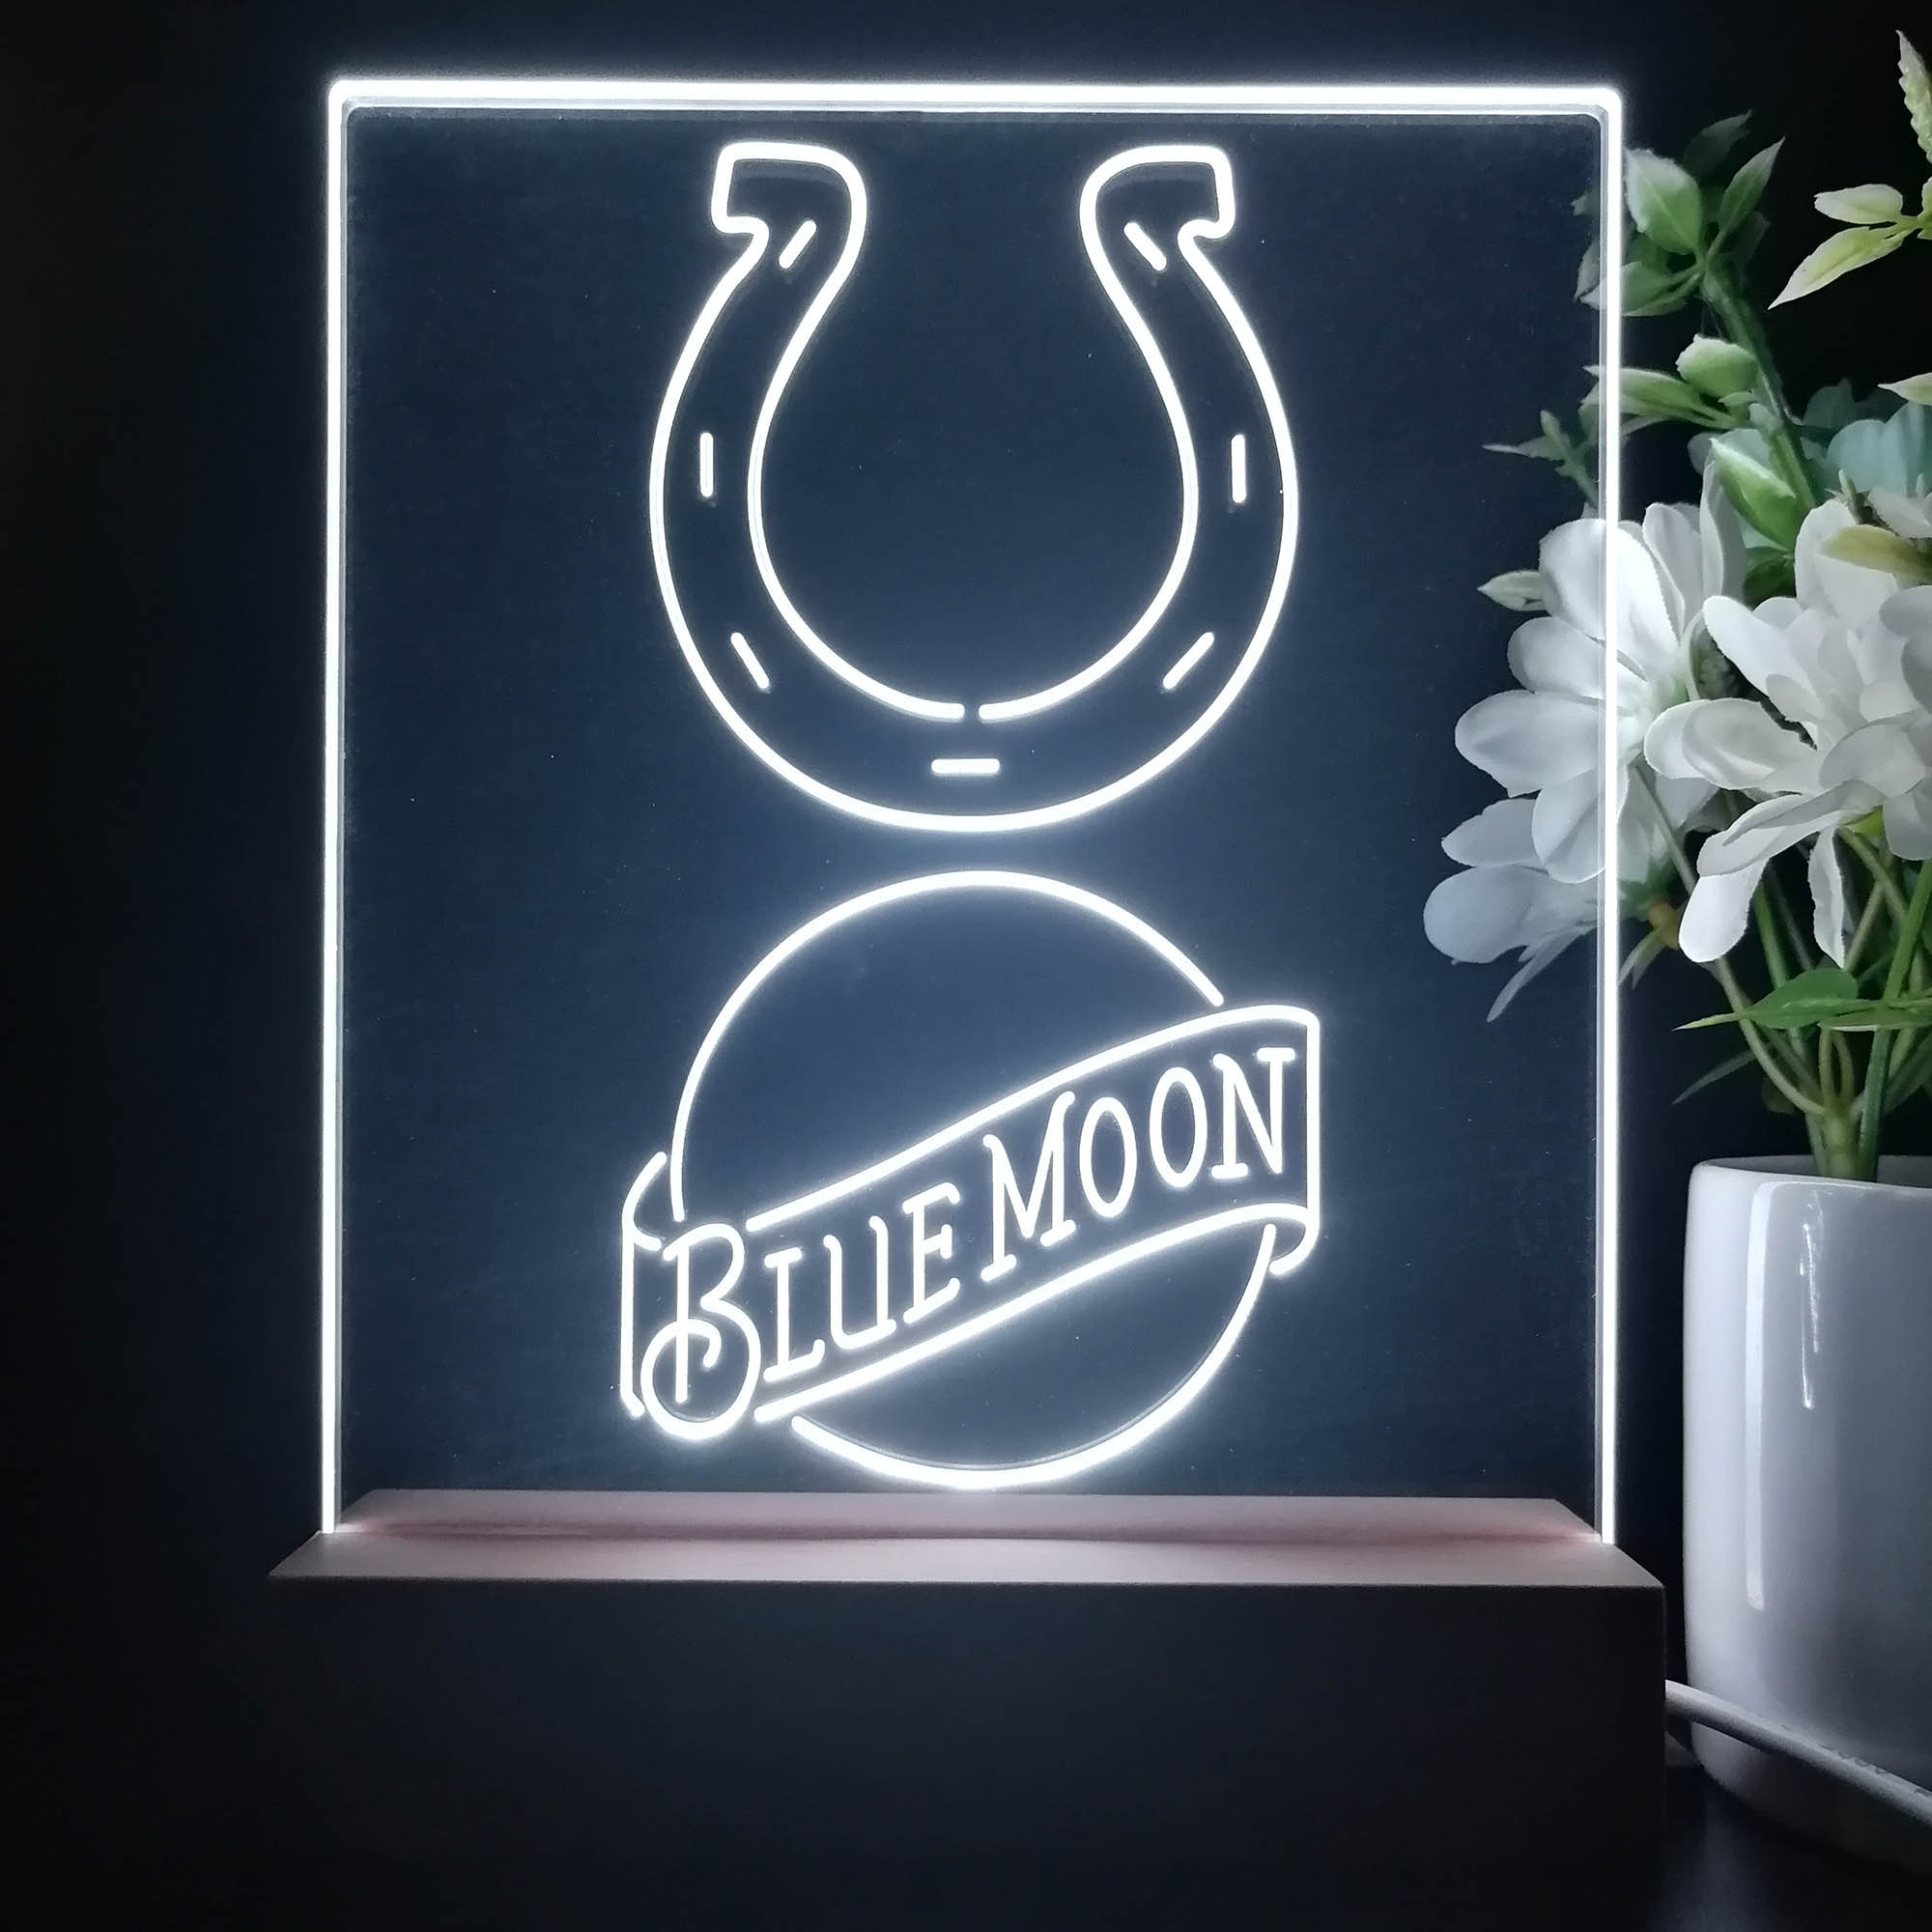 Indianapolis Colts Blue Moon Neon Sign Pub Bar Lamp